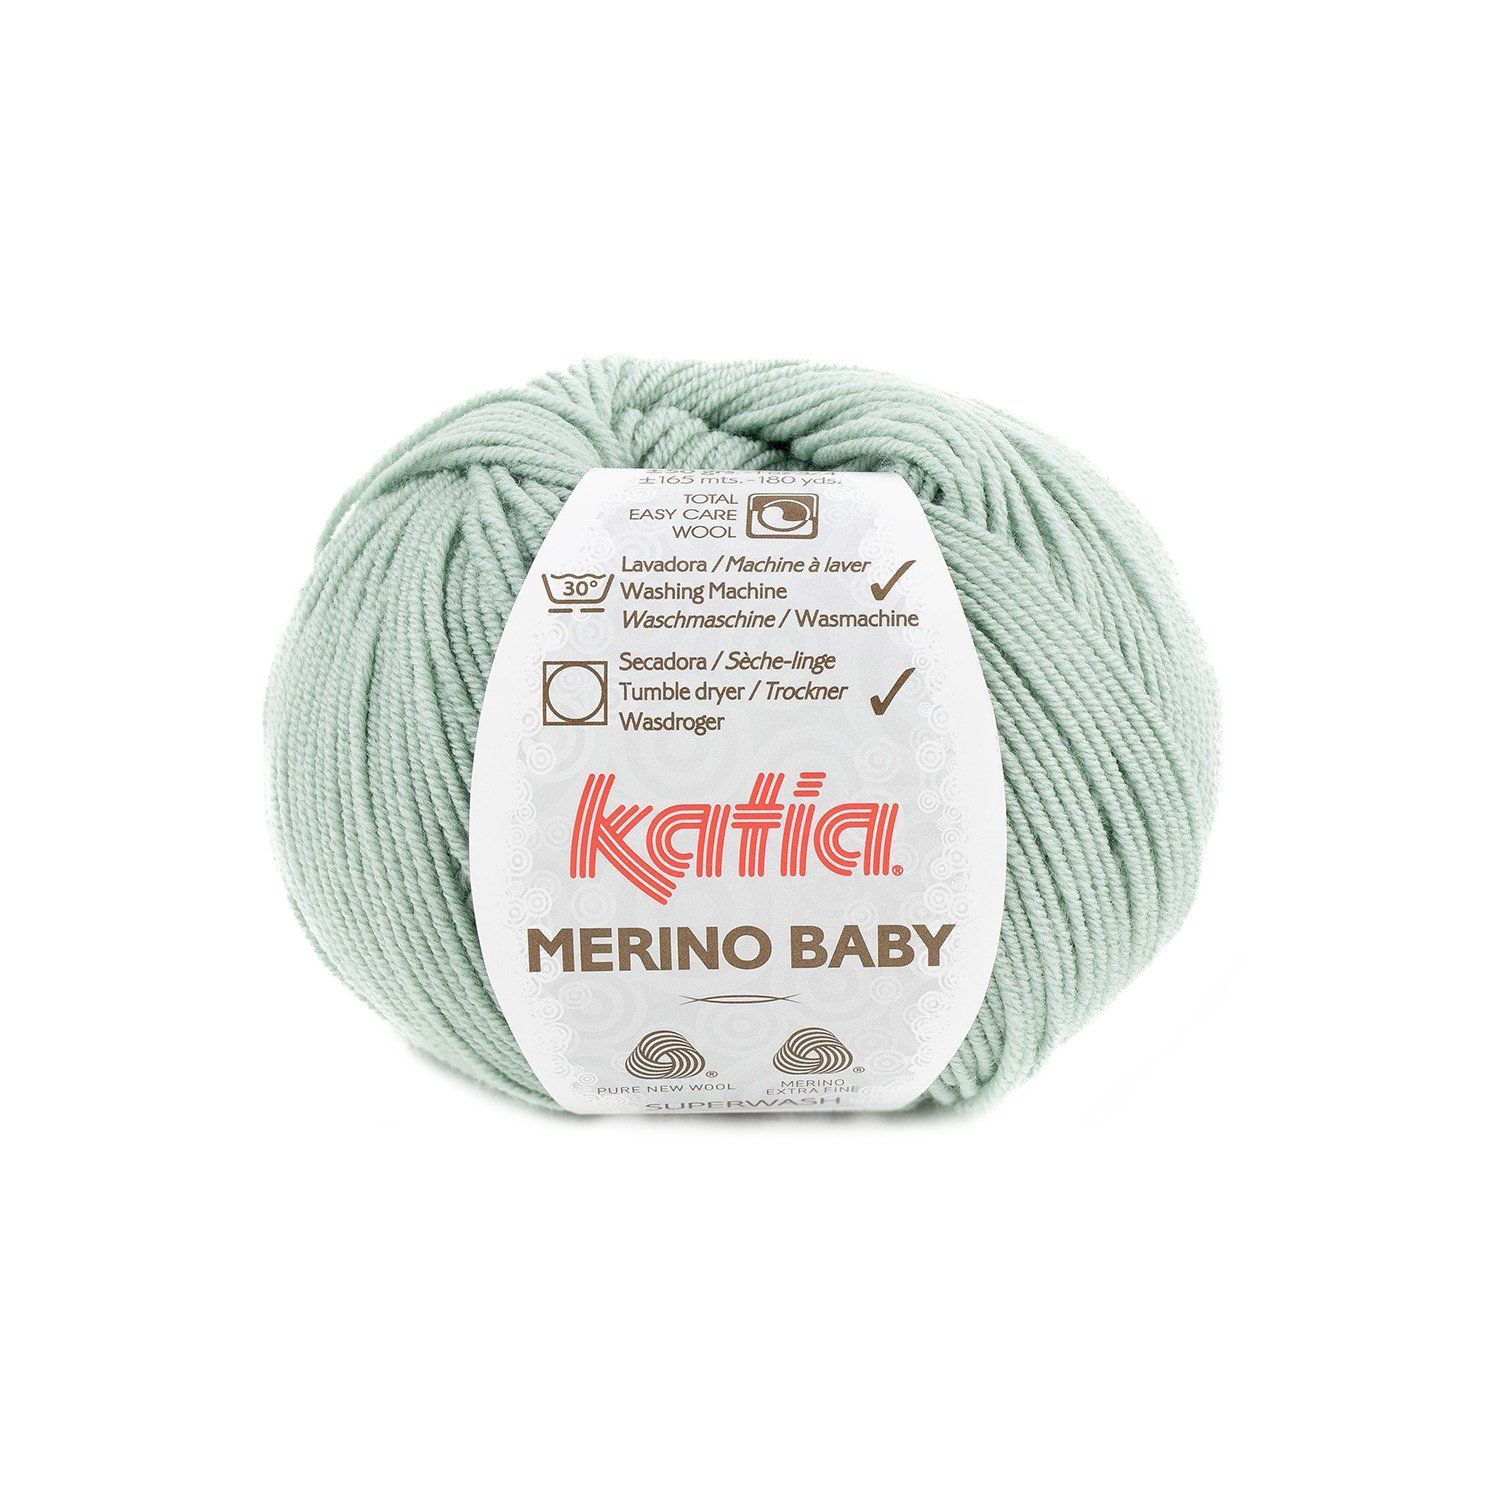 Merino Baby color 97, Reseda Green.